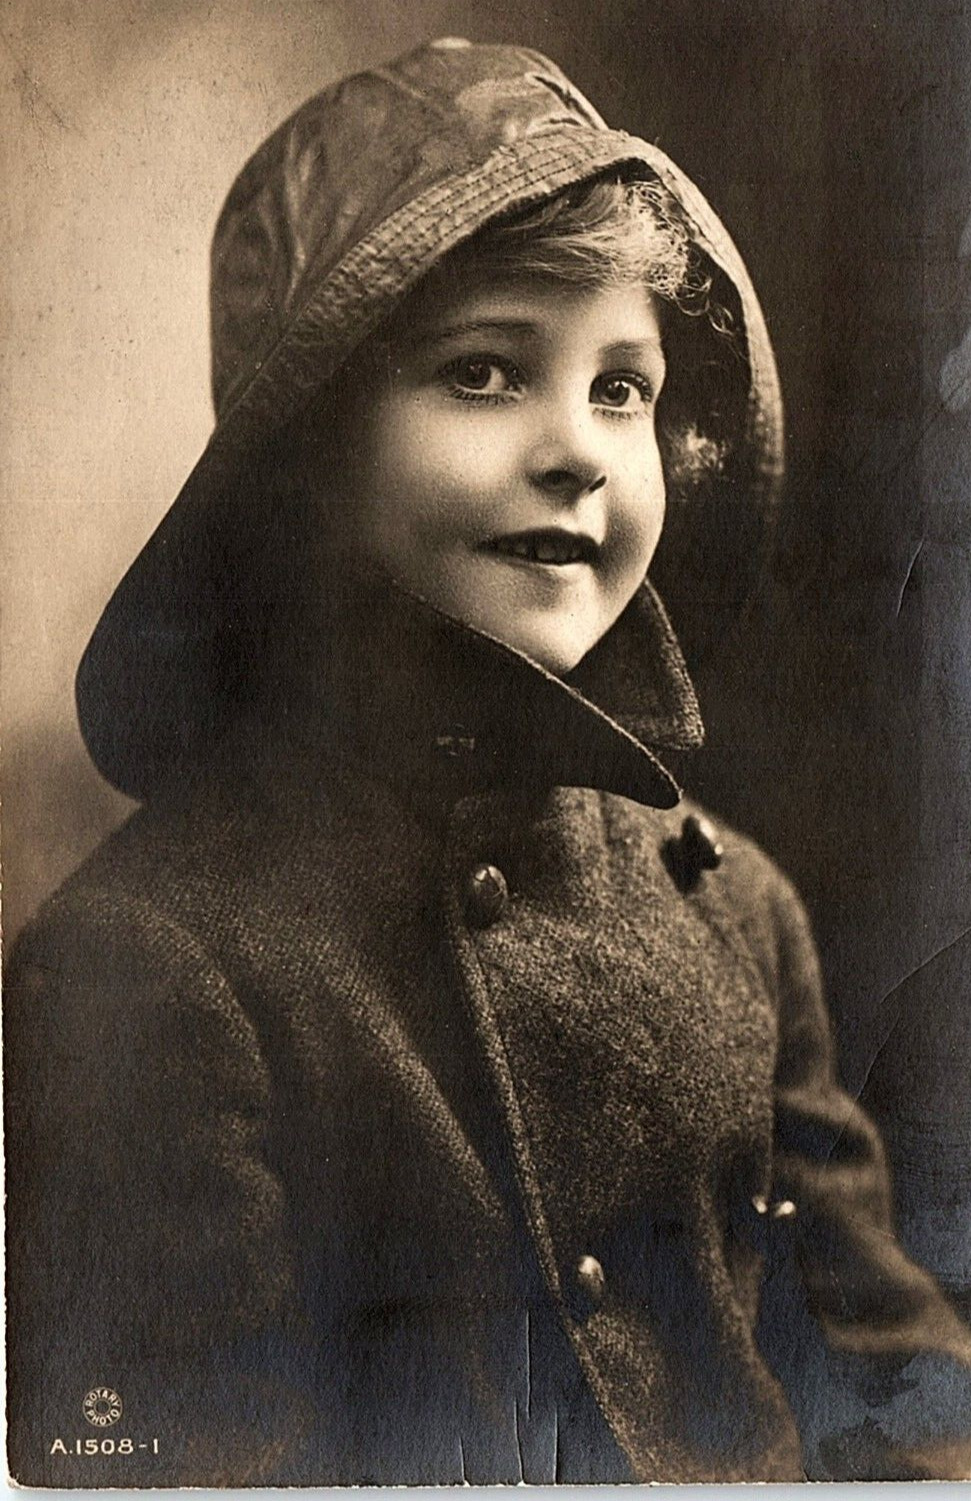 c1915 YOUNG BOY FISHERMAN HAT PEA COAT BRITISH PHOTO RPPC POSTCARD 43-177